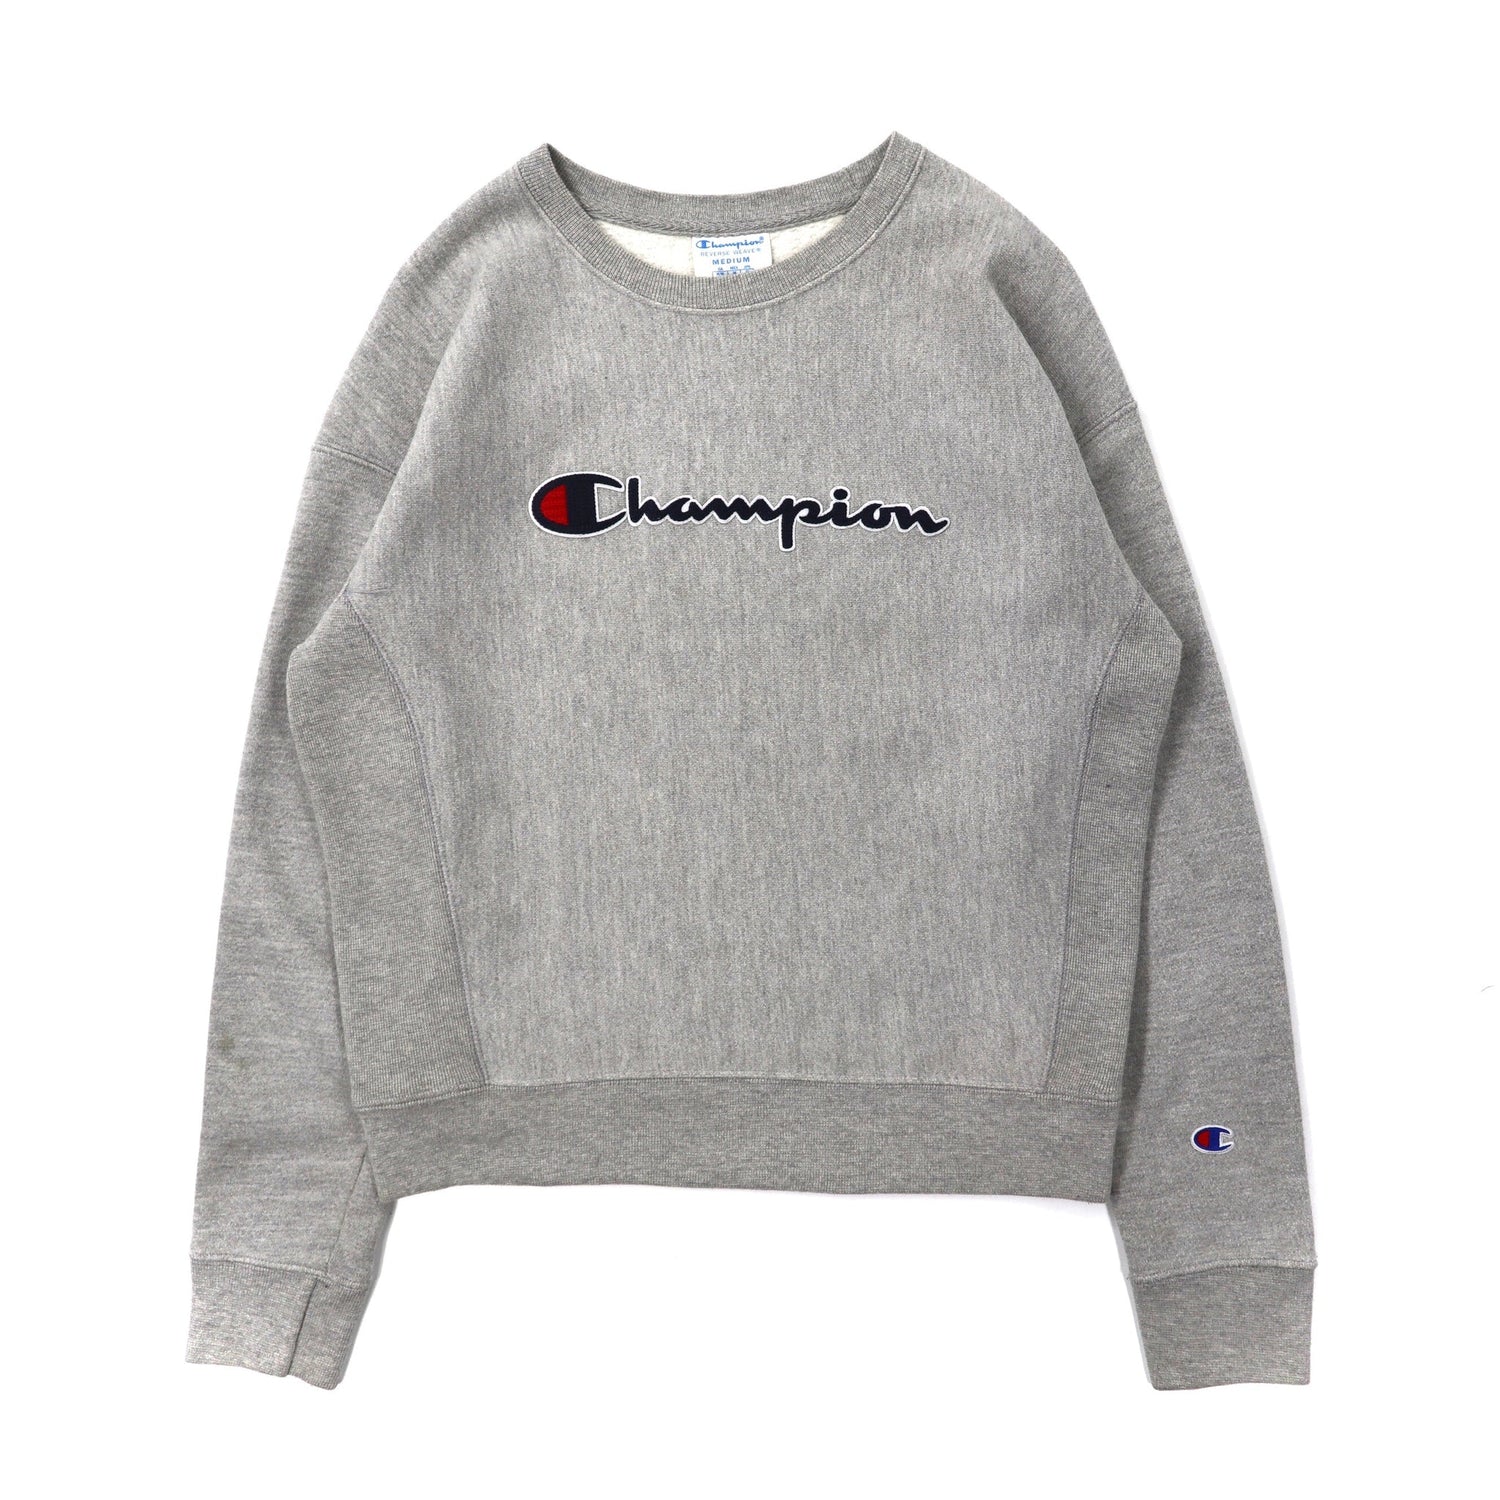 CHAMPION Reverse Weave Sweatshirt M Gray Cotton Scriptrogo 